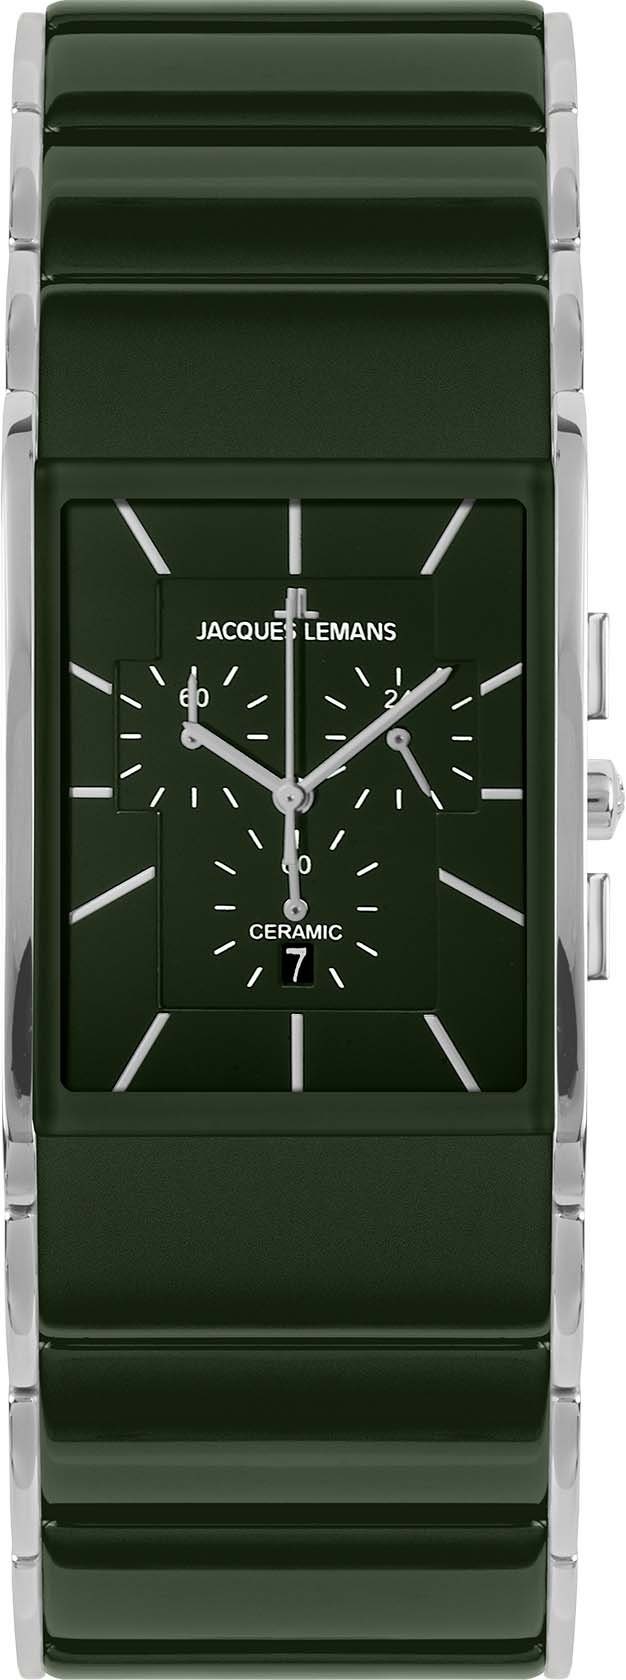 Jacques Lemans Chronograph Dublin, 1-1941G, Quarzuhr, Armbanduhr, Herrenuhr, Keramik, eckig, Stoppfunktion